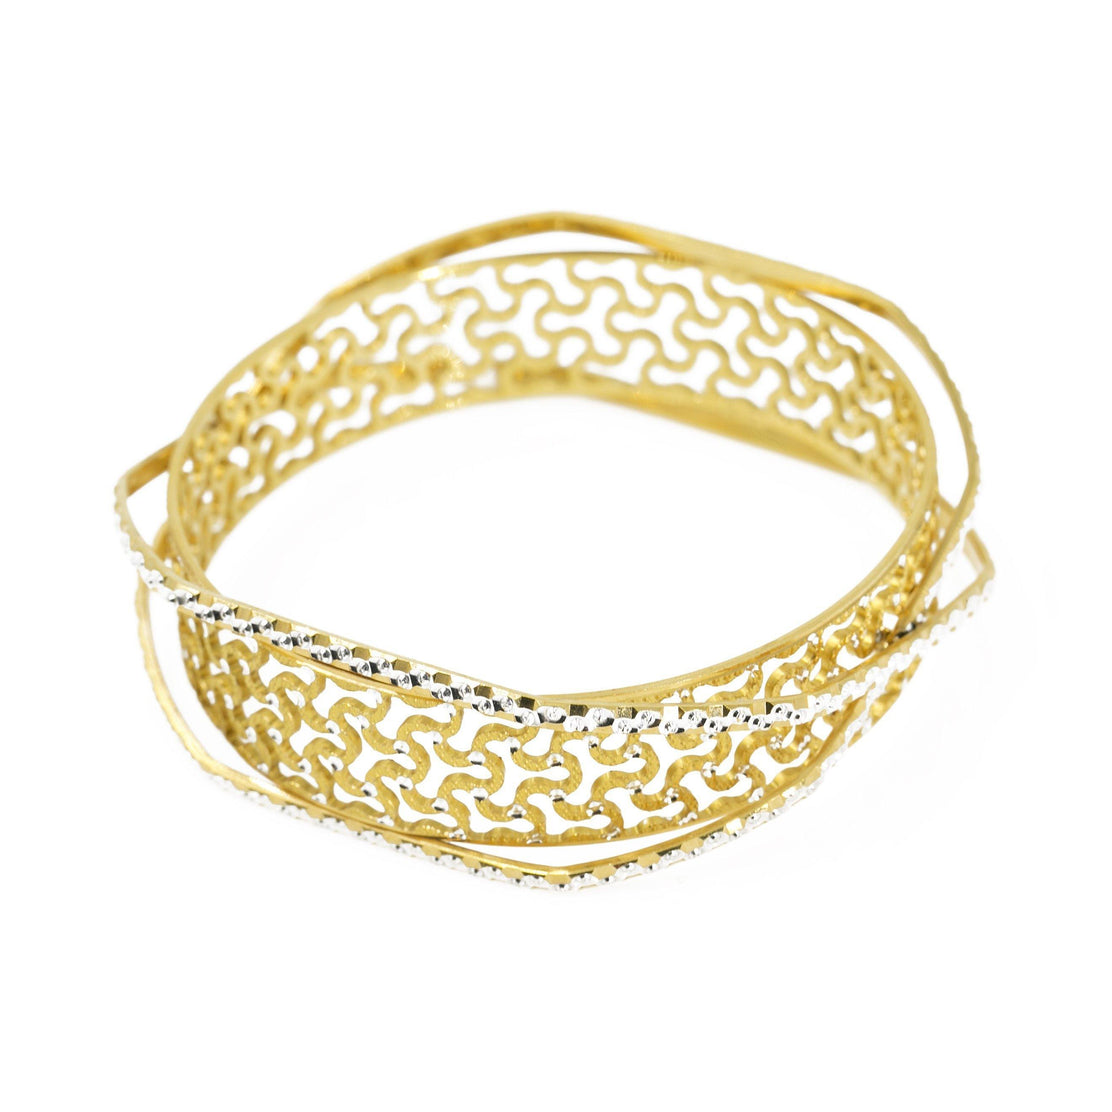 Bracelet for Women Wrap Multi-Layer Leather Bracelet Magnetic Clasp Cuff  Bangle Jewelry - Walmart.com